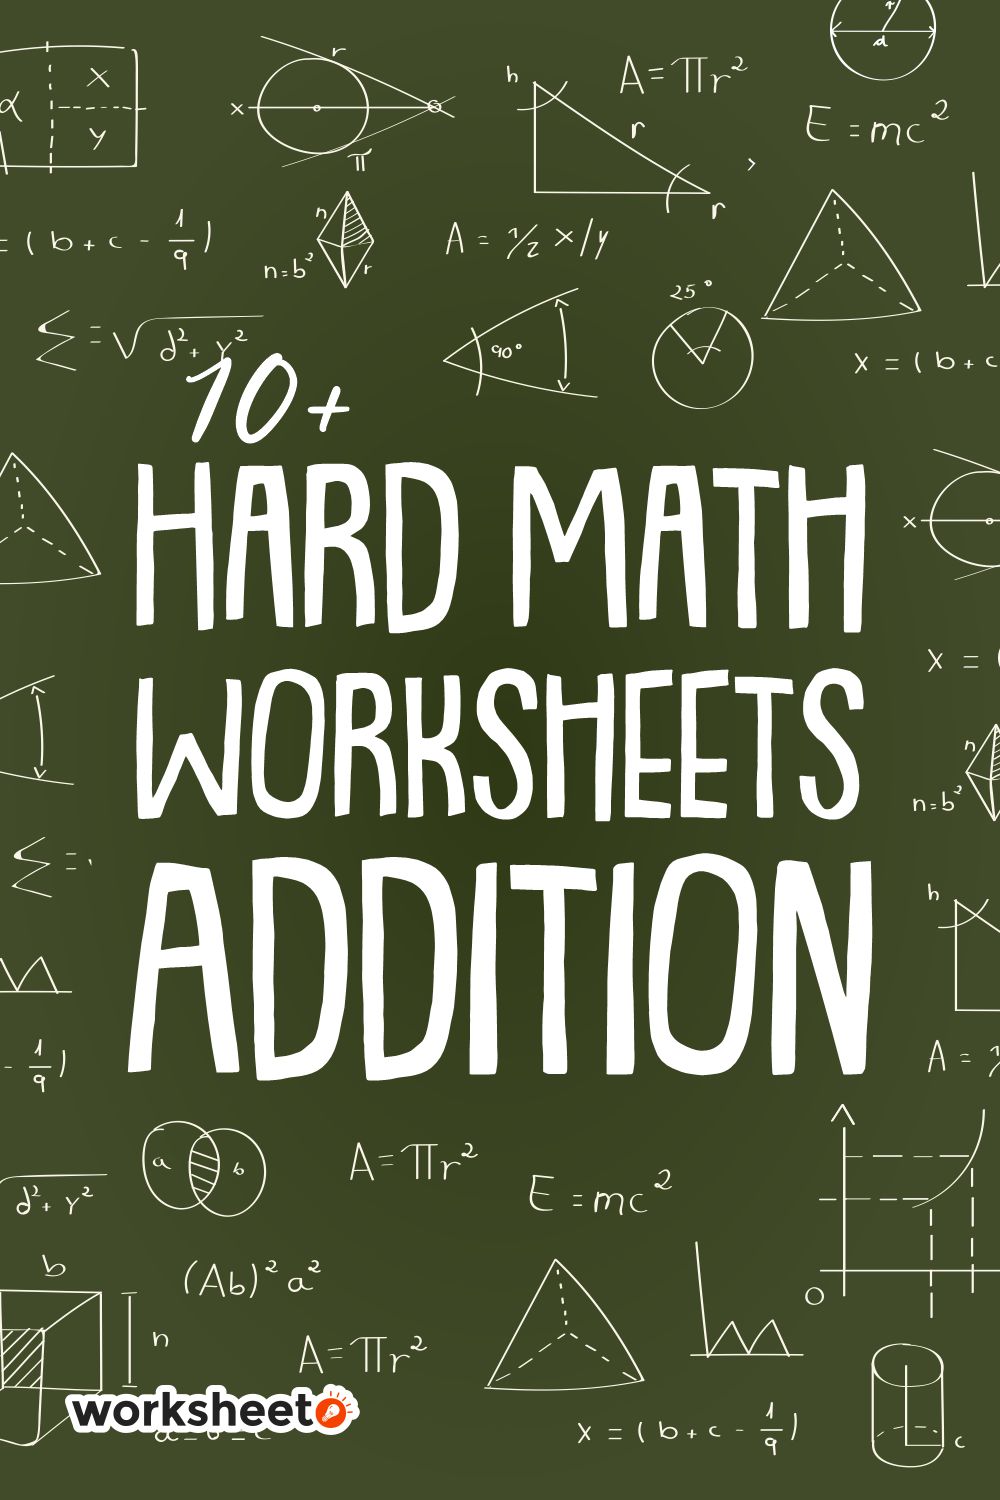 Hard Math Worksheets Addition